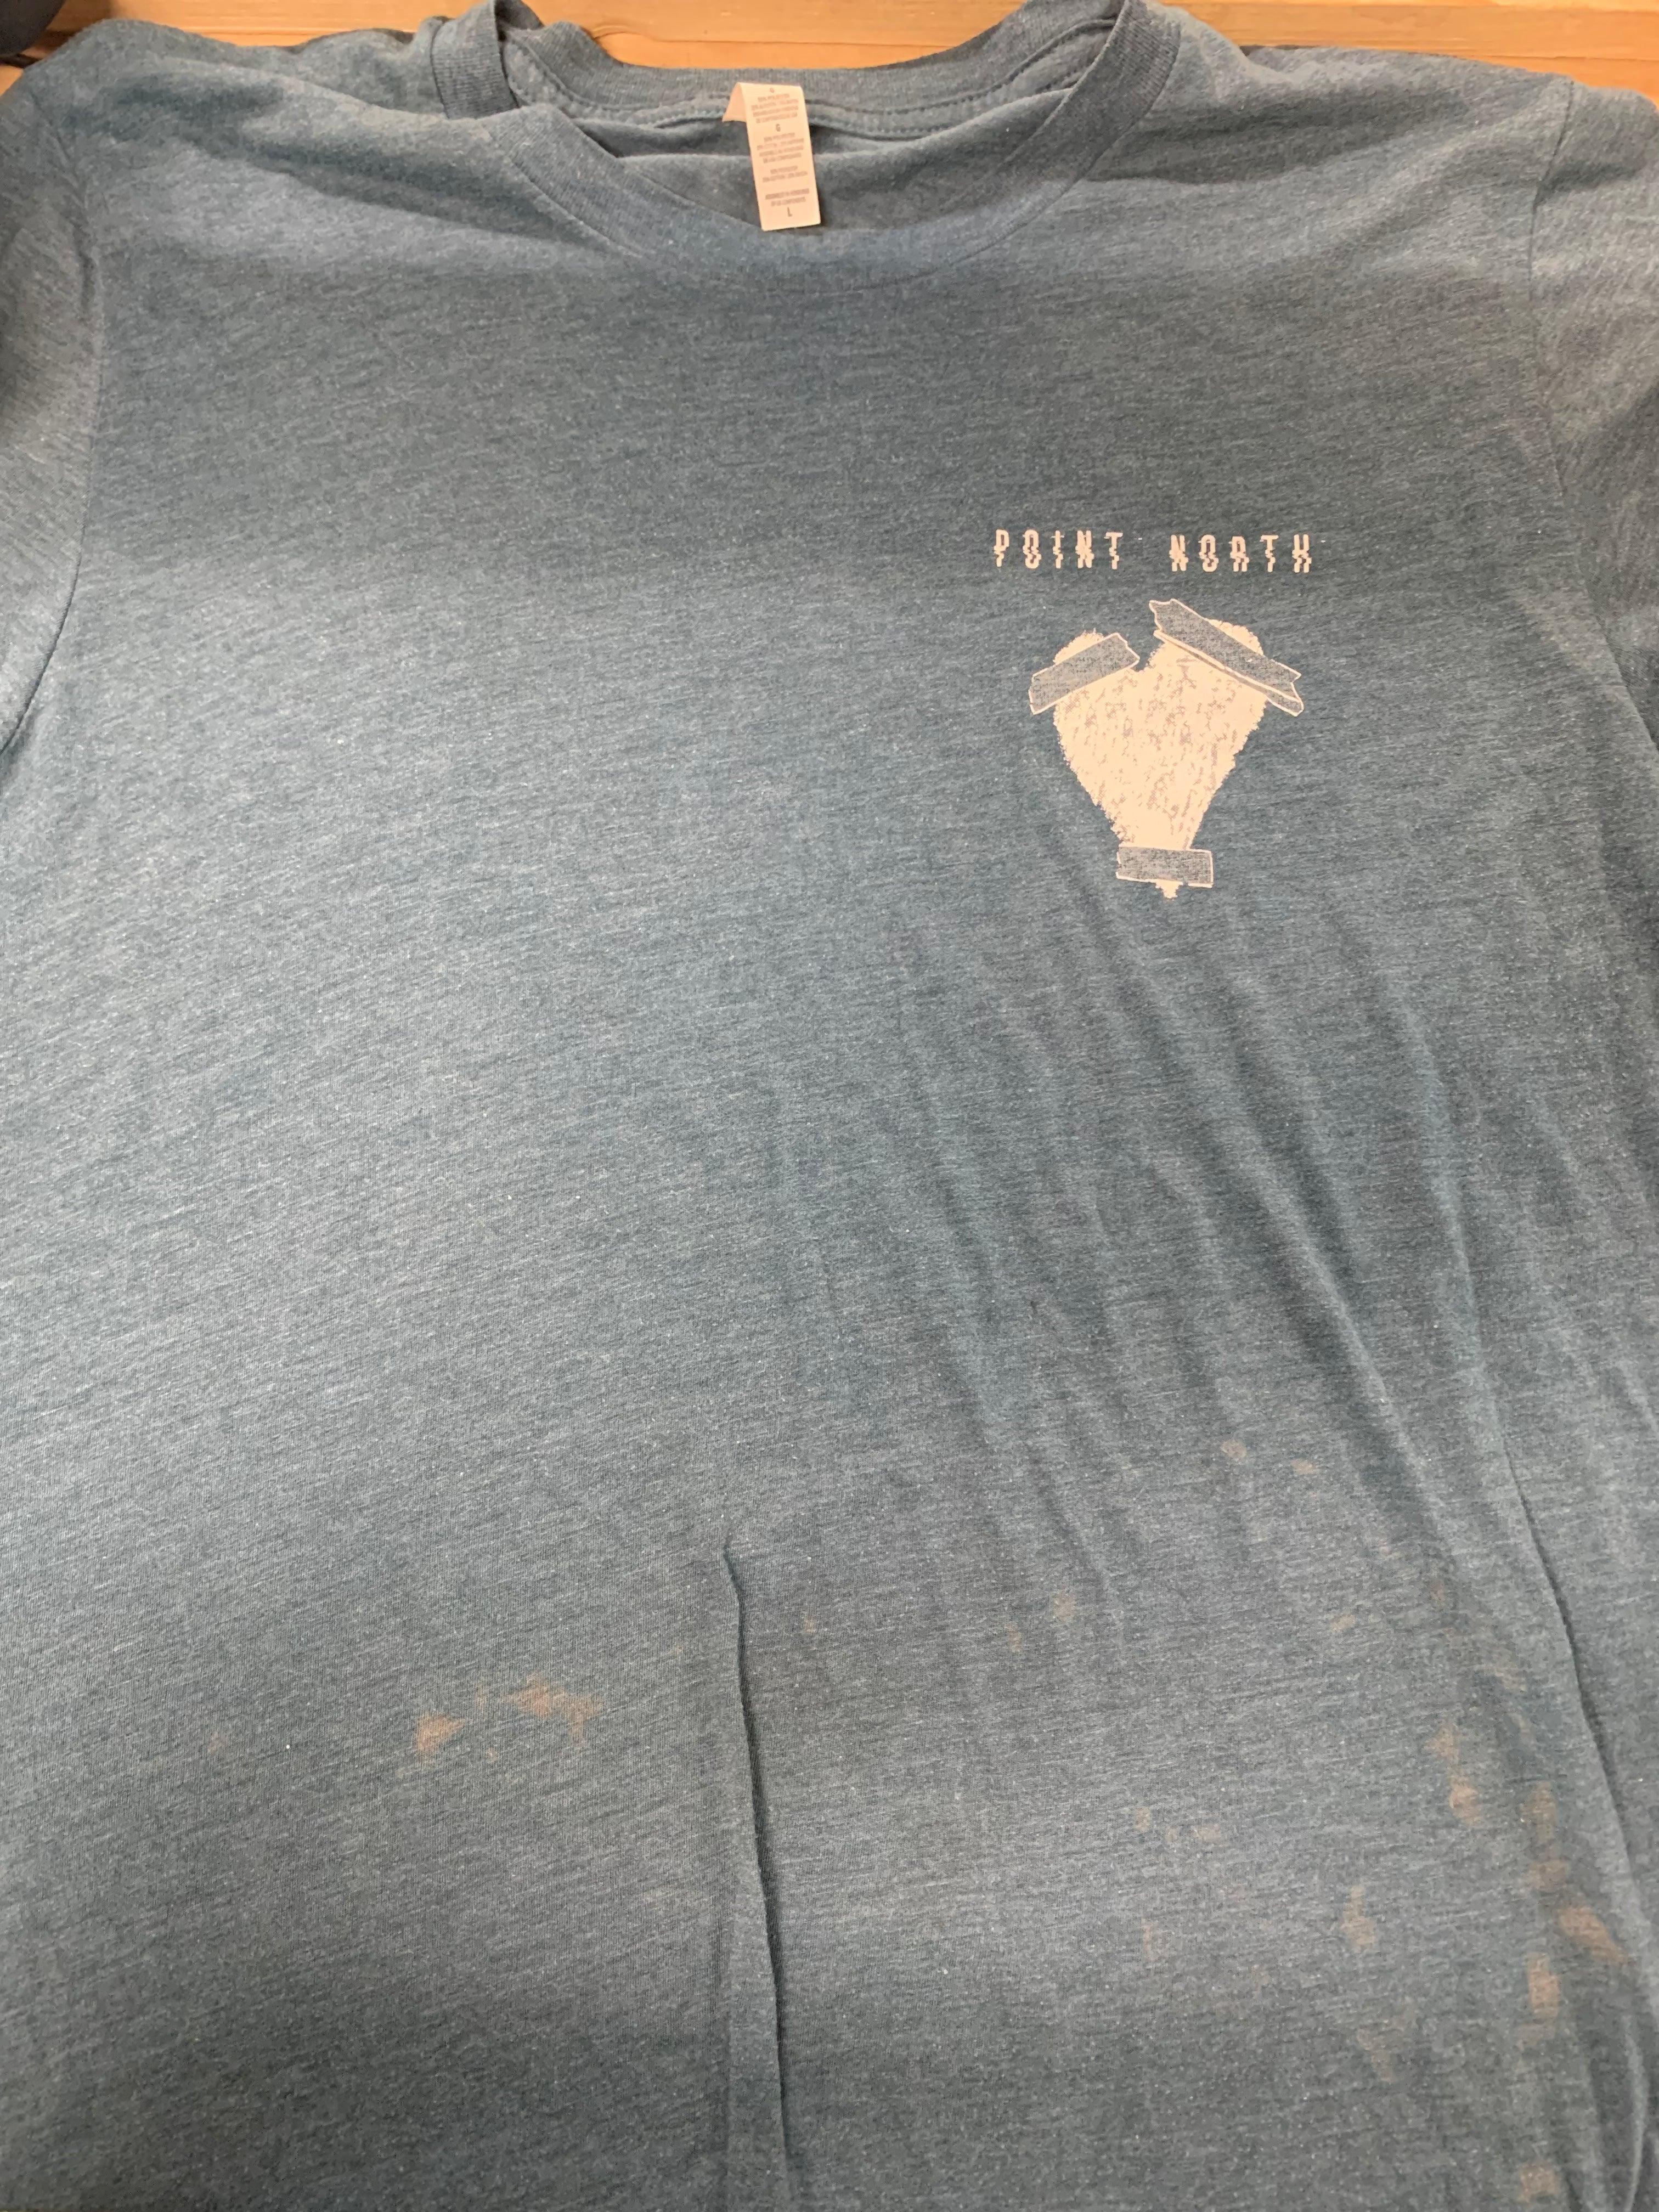 Point North Taped Heart T-Shirt, Aqua Blue W/ Minor Bleach Stains (SEE DESCRIPTION), L